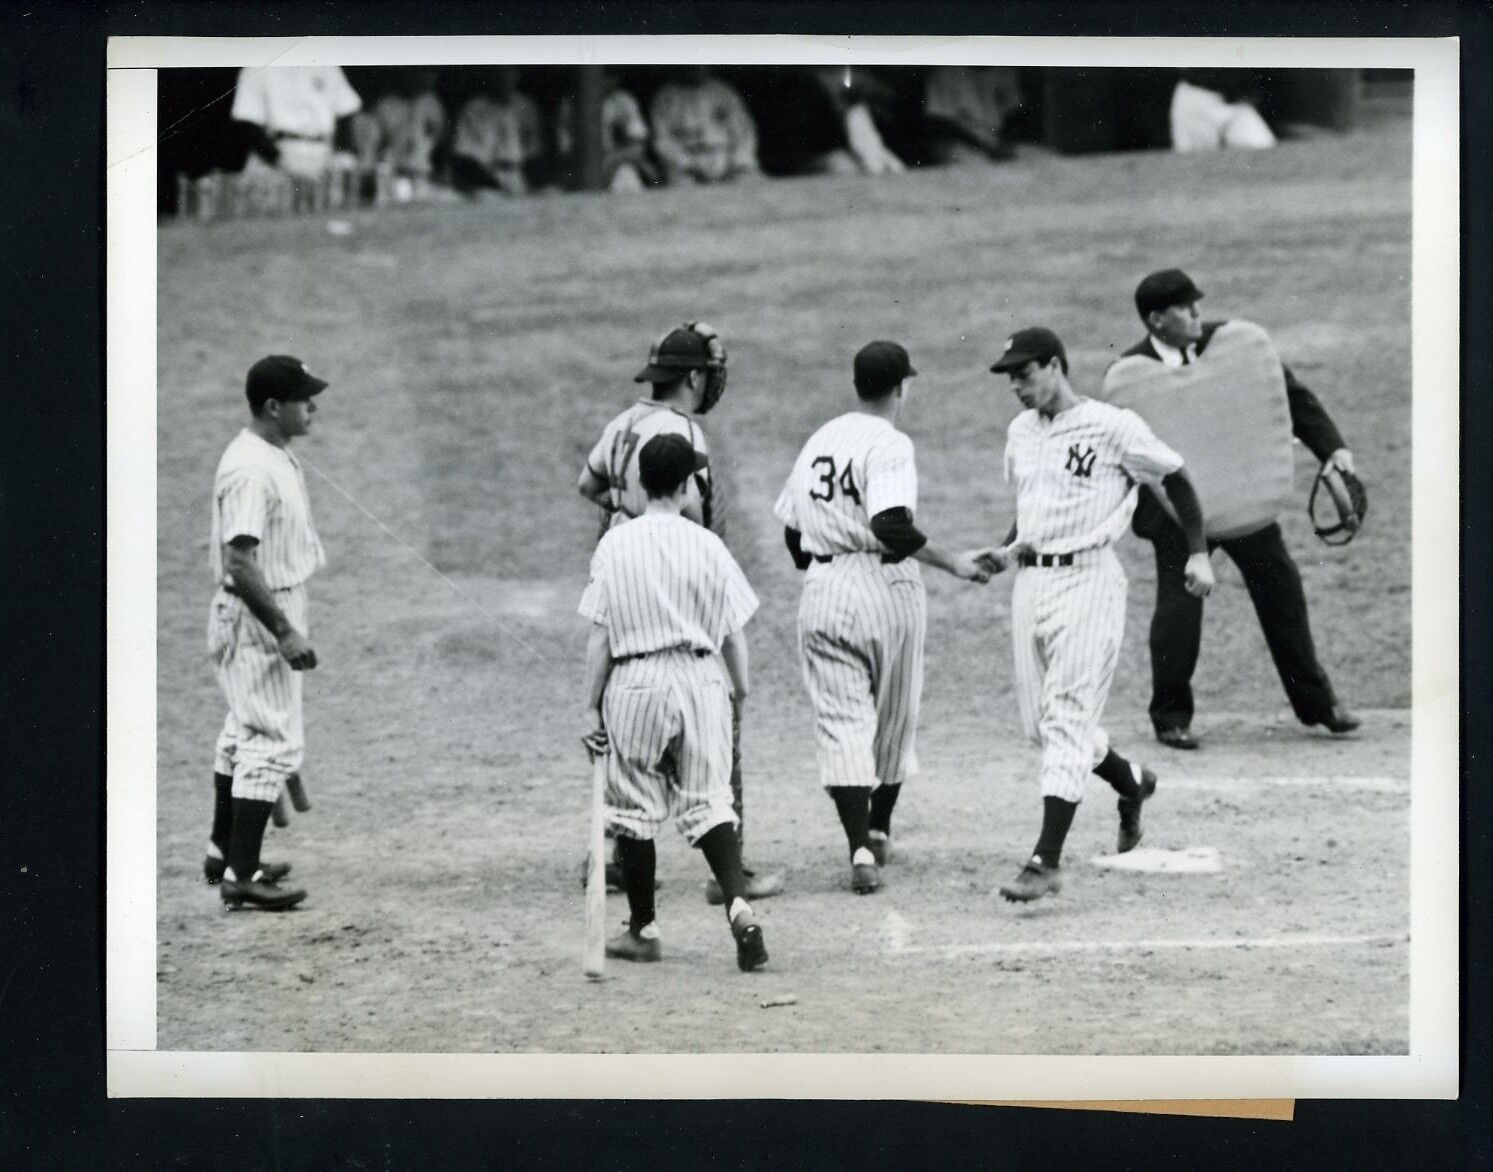 Joe DiMaggio Home Run 1942 Type 1 Press Photo Poster painting Yankees Hassett Charlie Keller